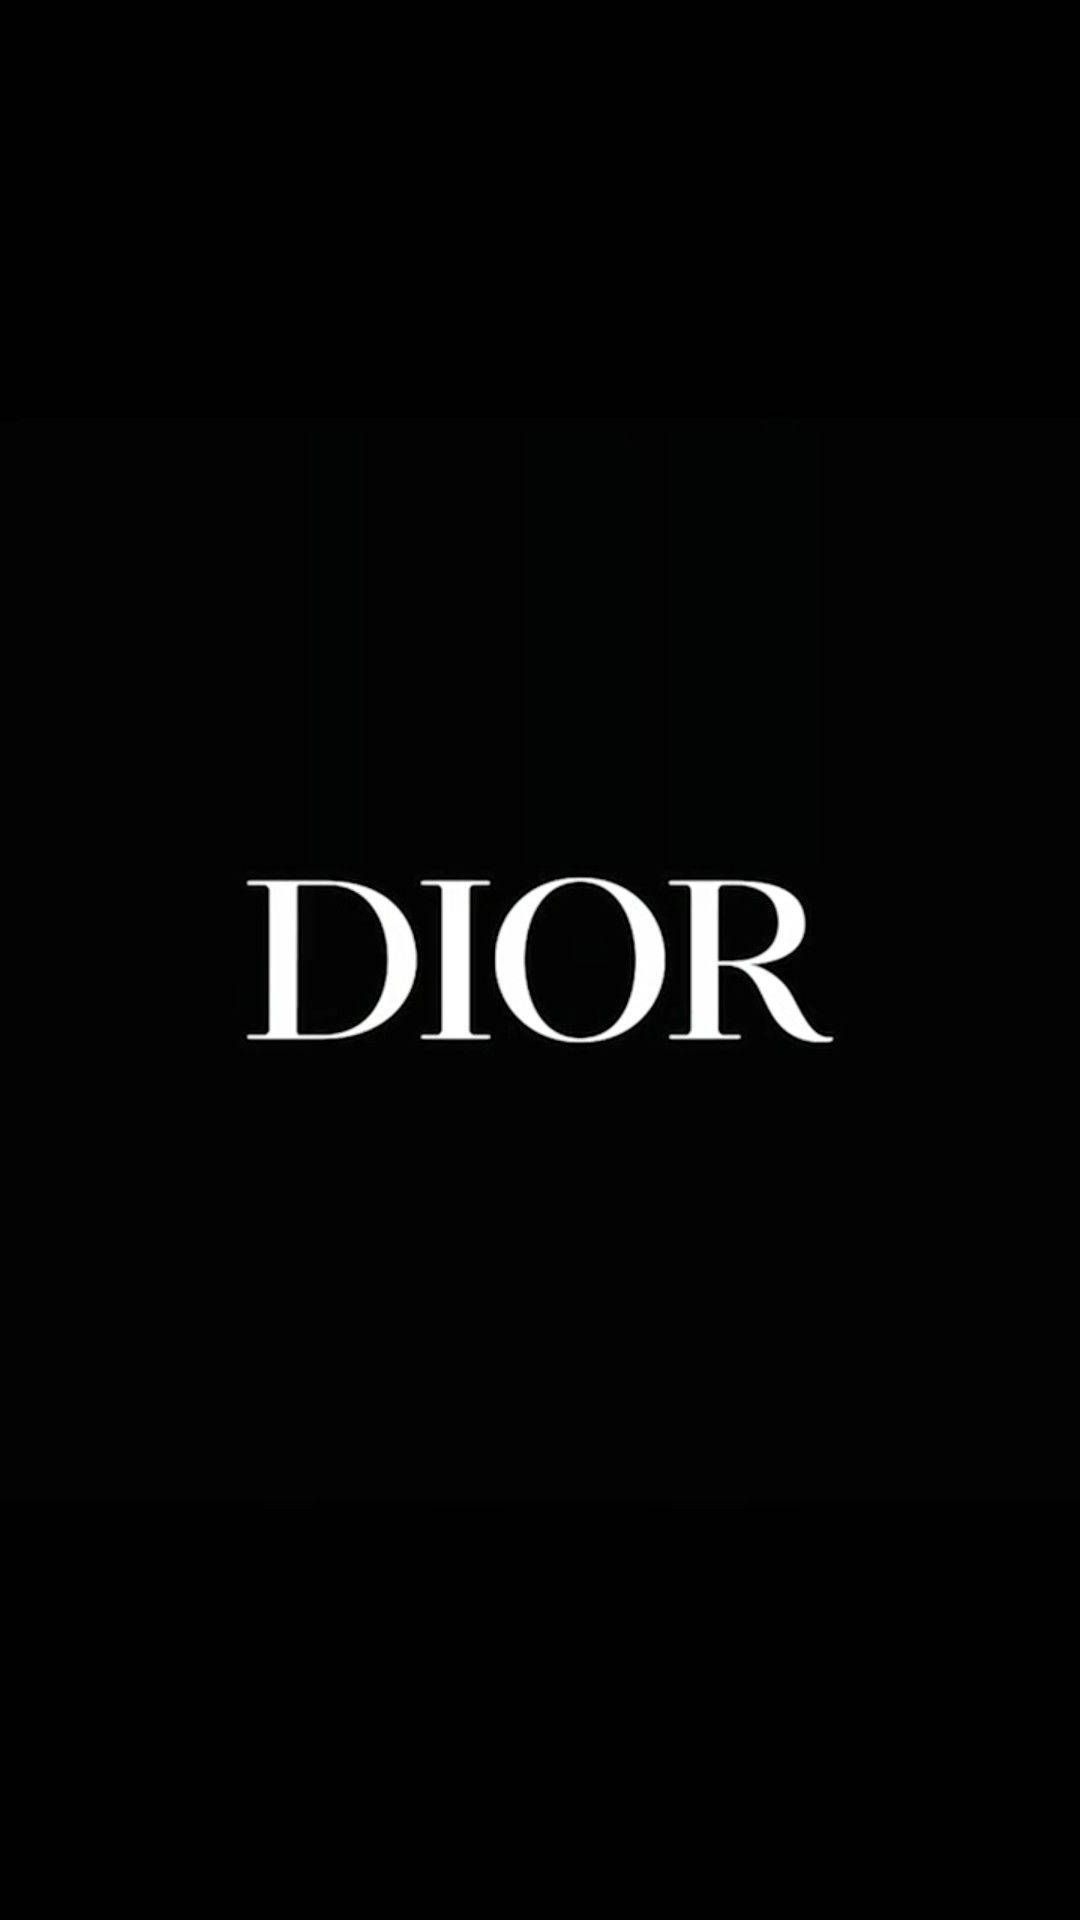 Dior logo wallpaper for your desktop - Dior